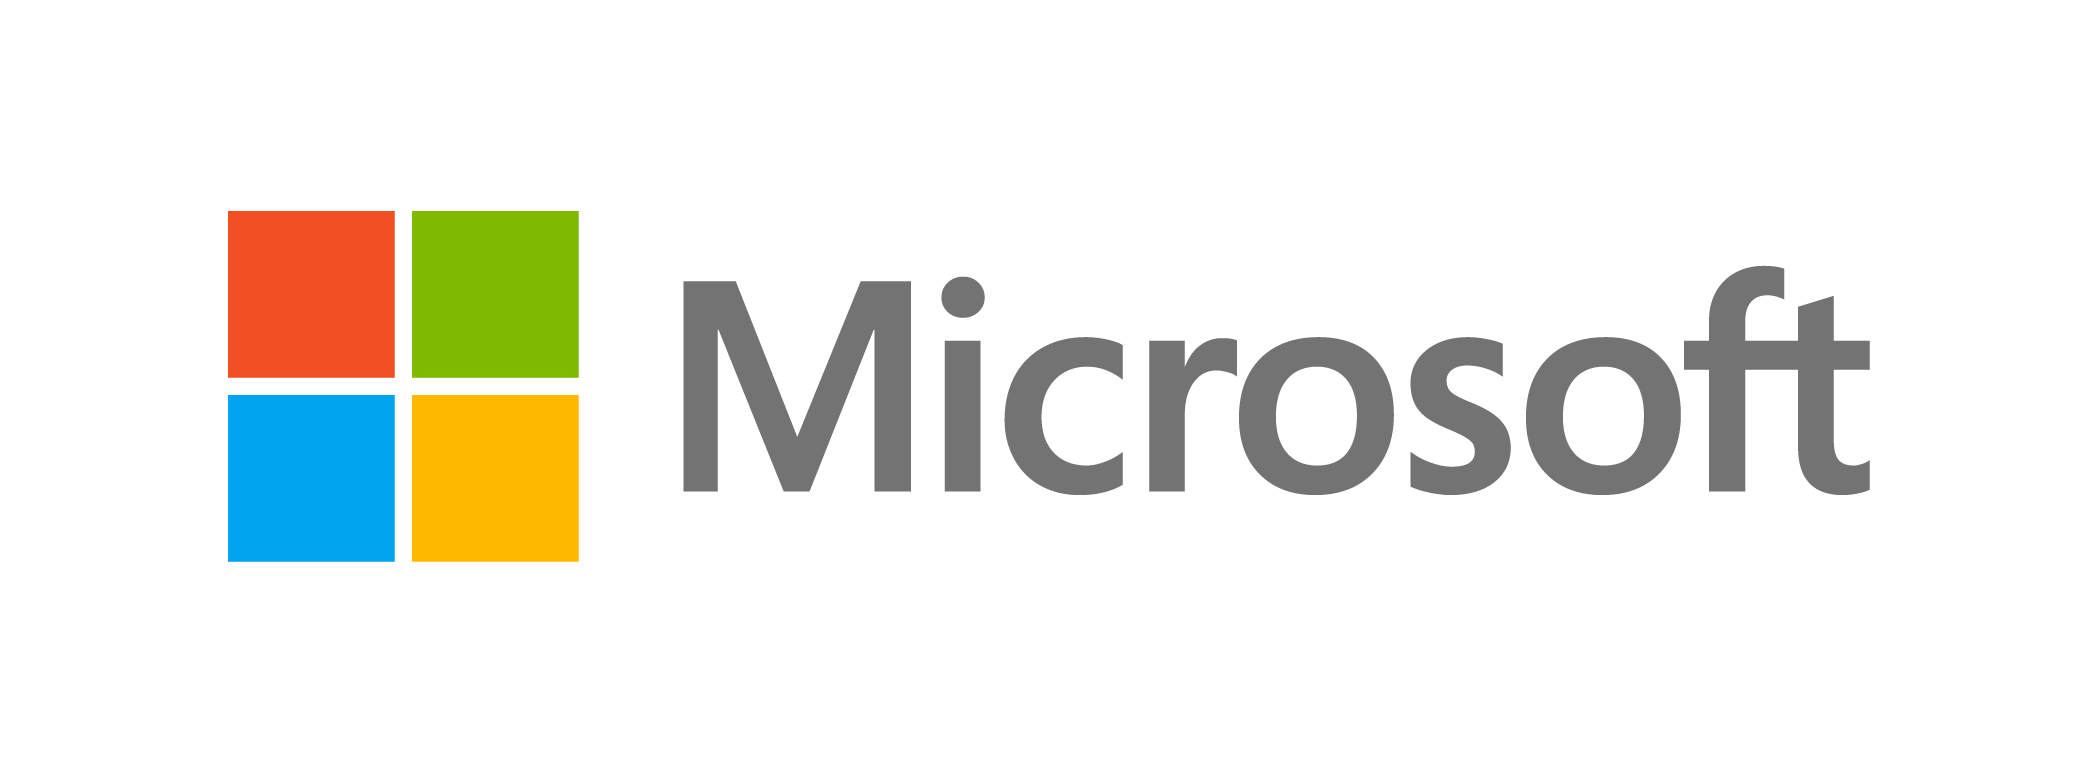 SCOM Logo - Microsoft SCOM Integration | xMatters